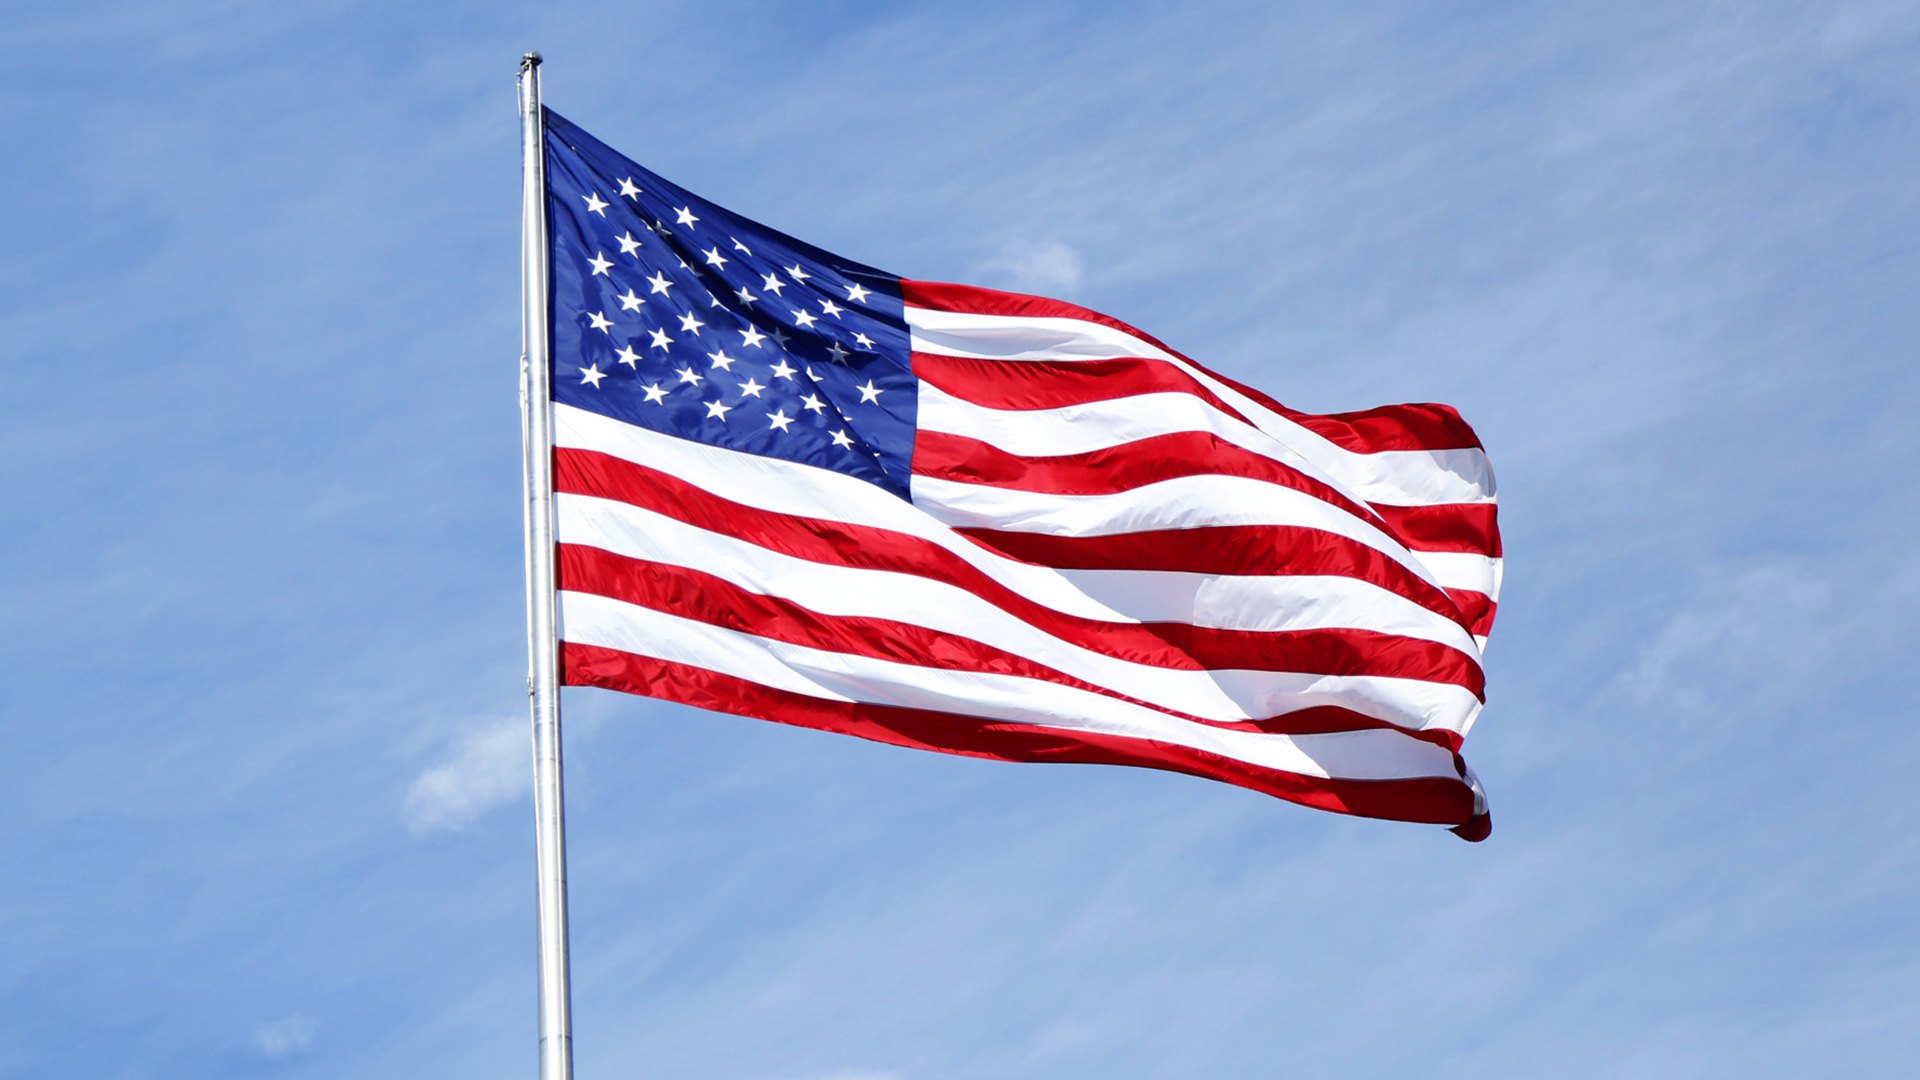 Waving American Flag Video Free Download Flashcrack S Blog